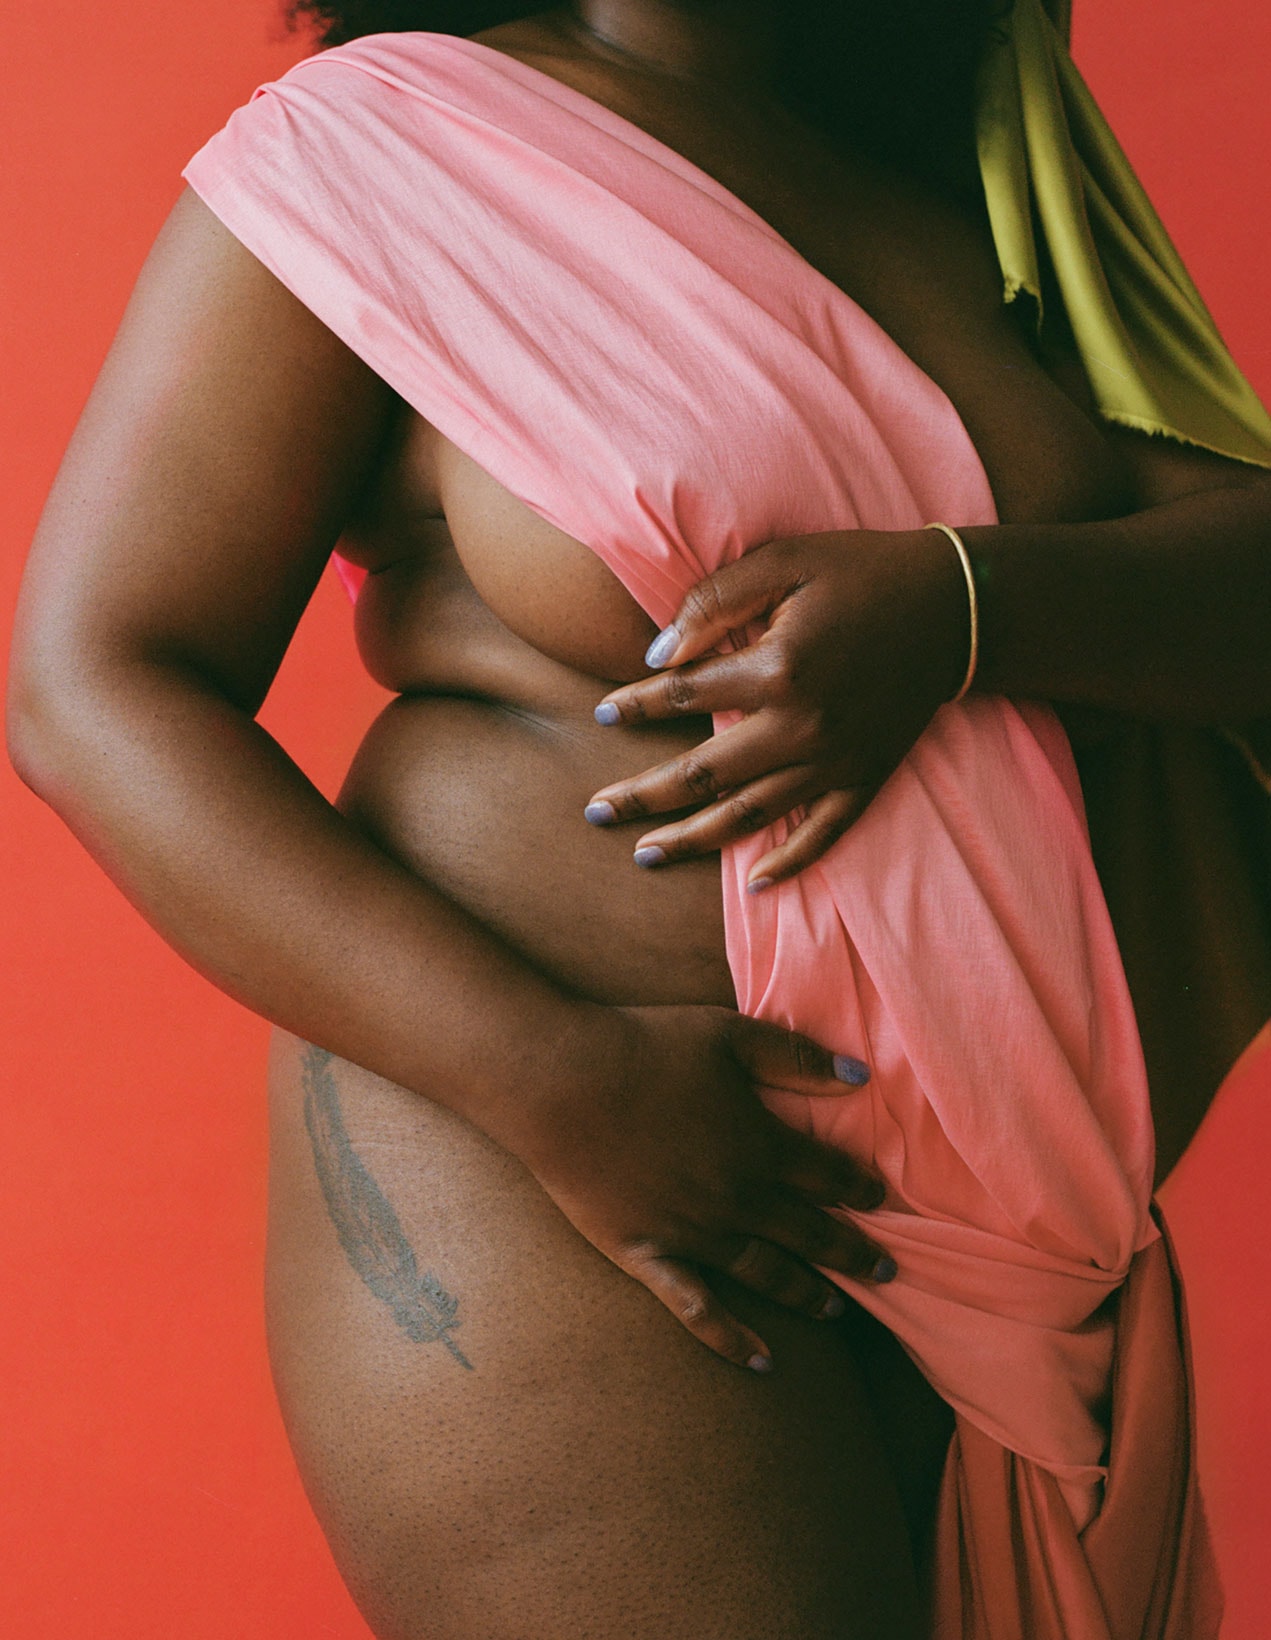 billie mothers day campaign postpartum bodies arm hands body